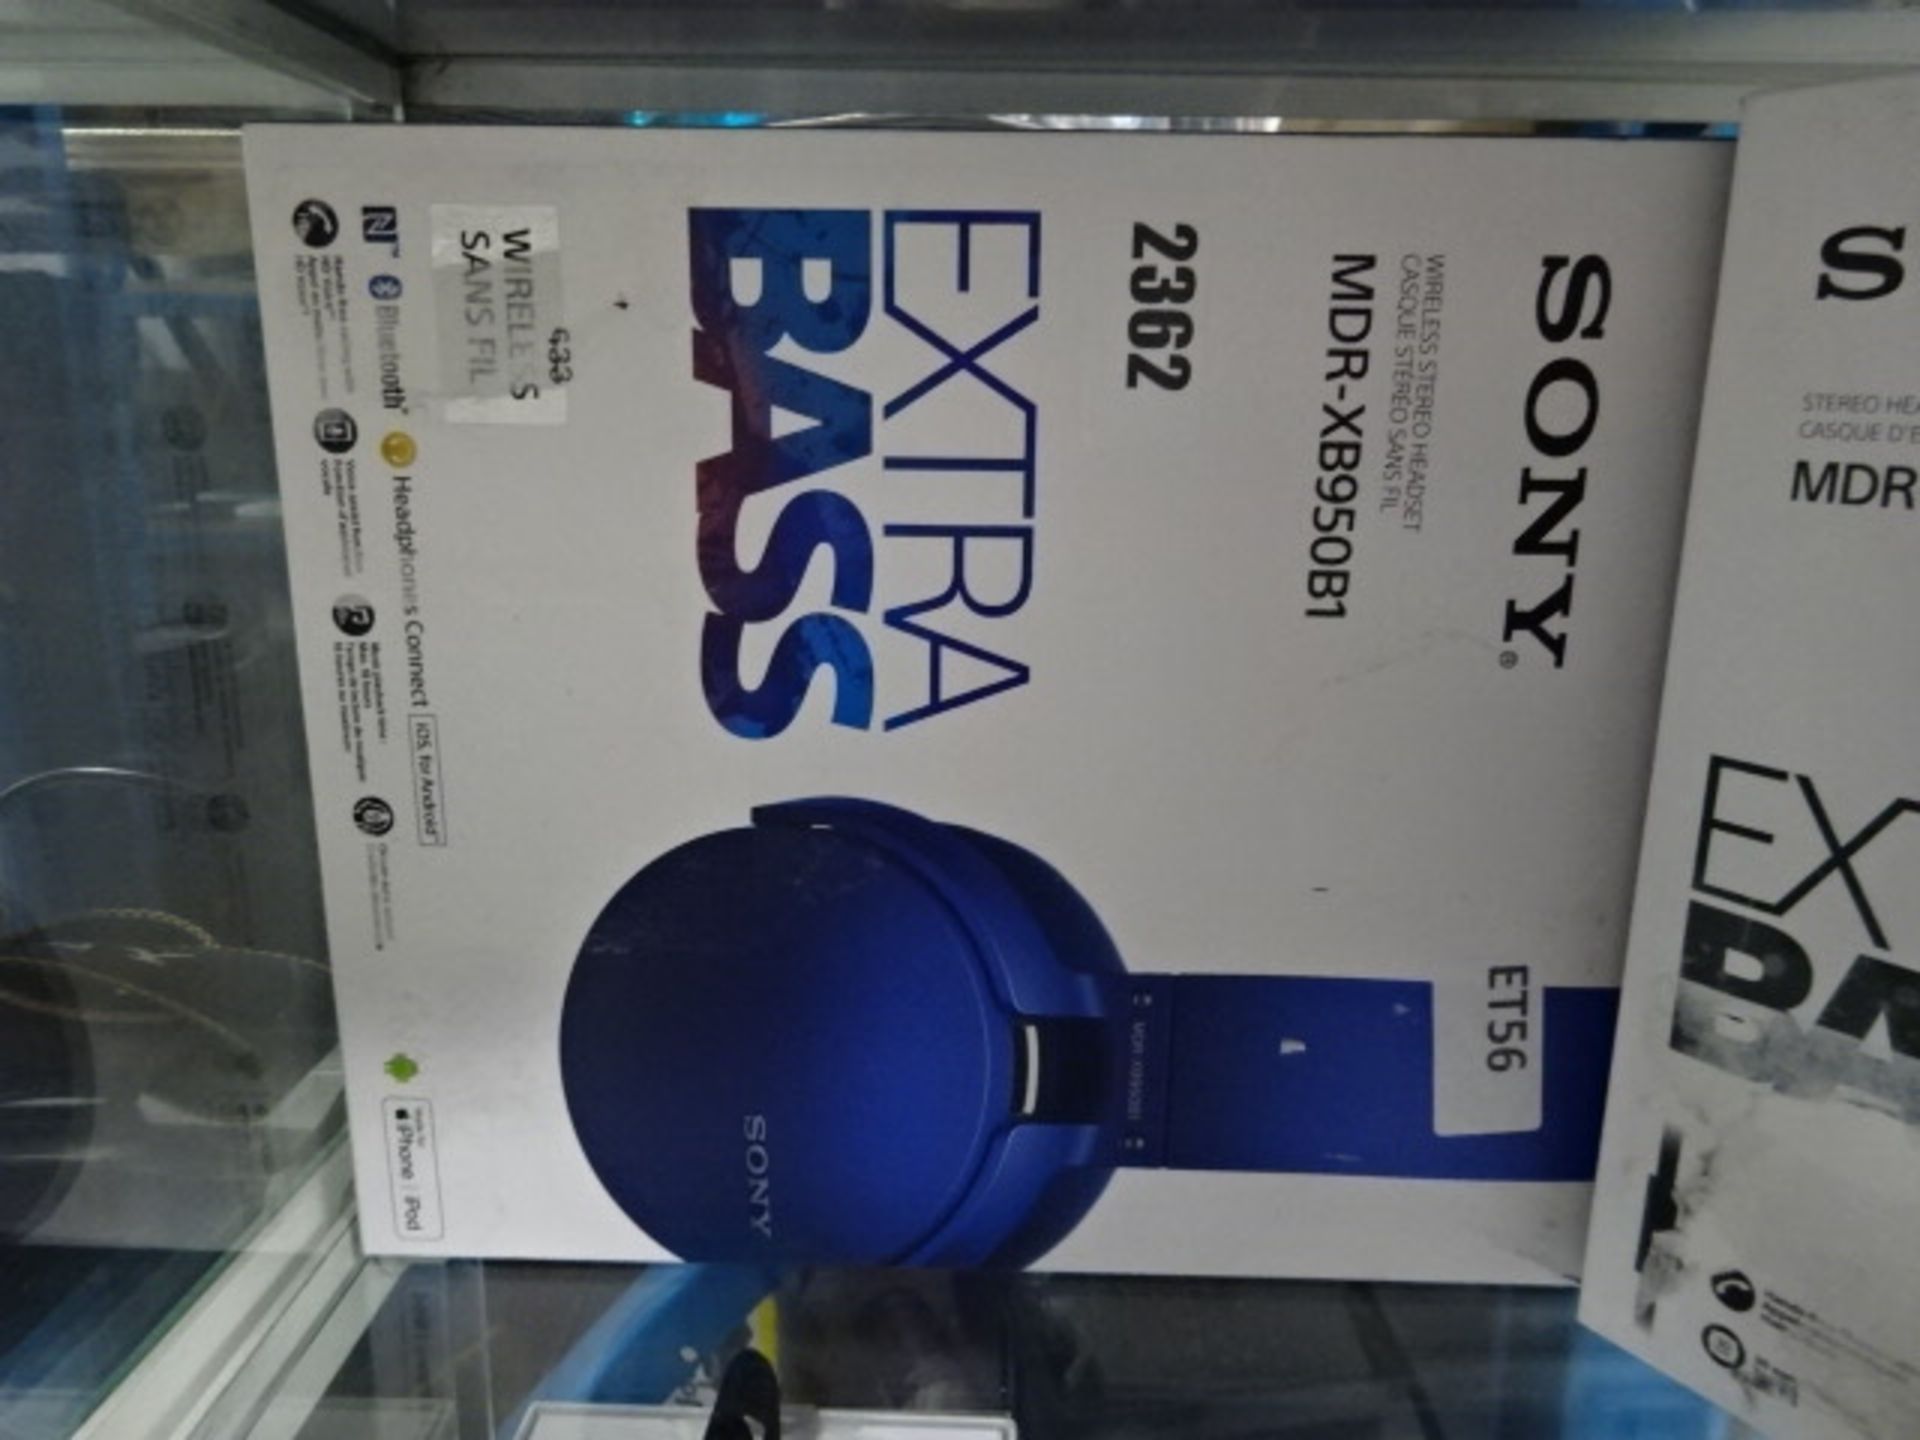 Sony MDR-XB950B1 heaphones